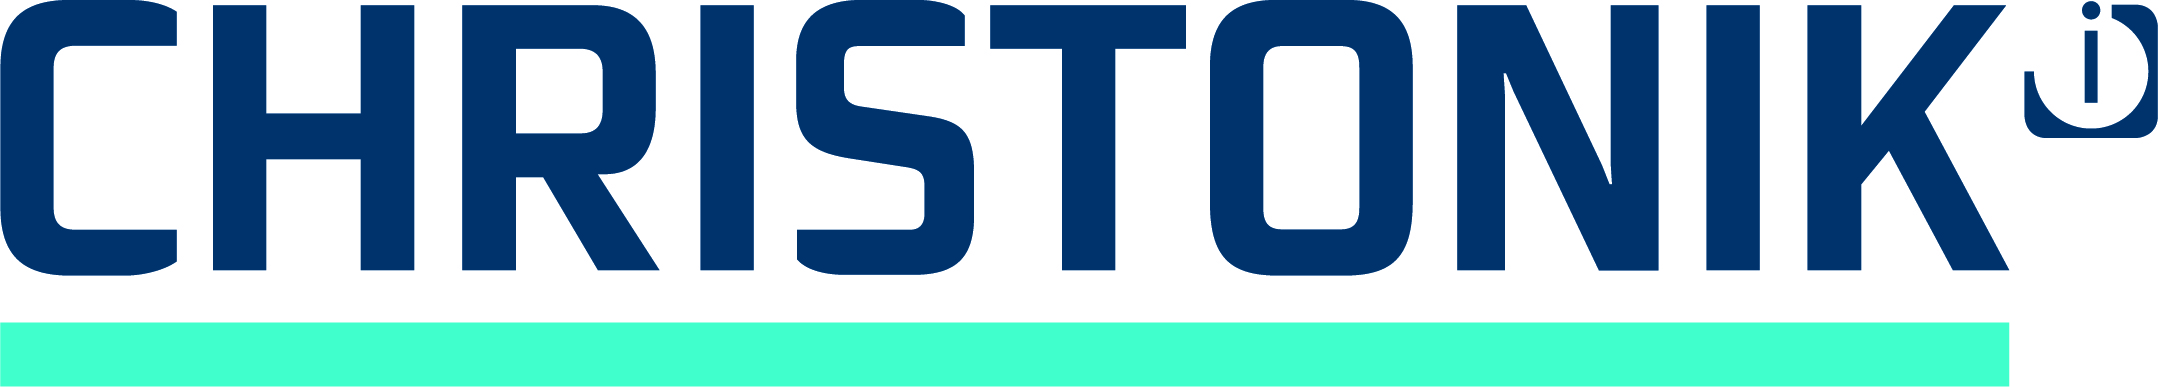 Christonik logo